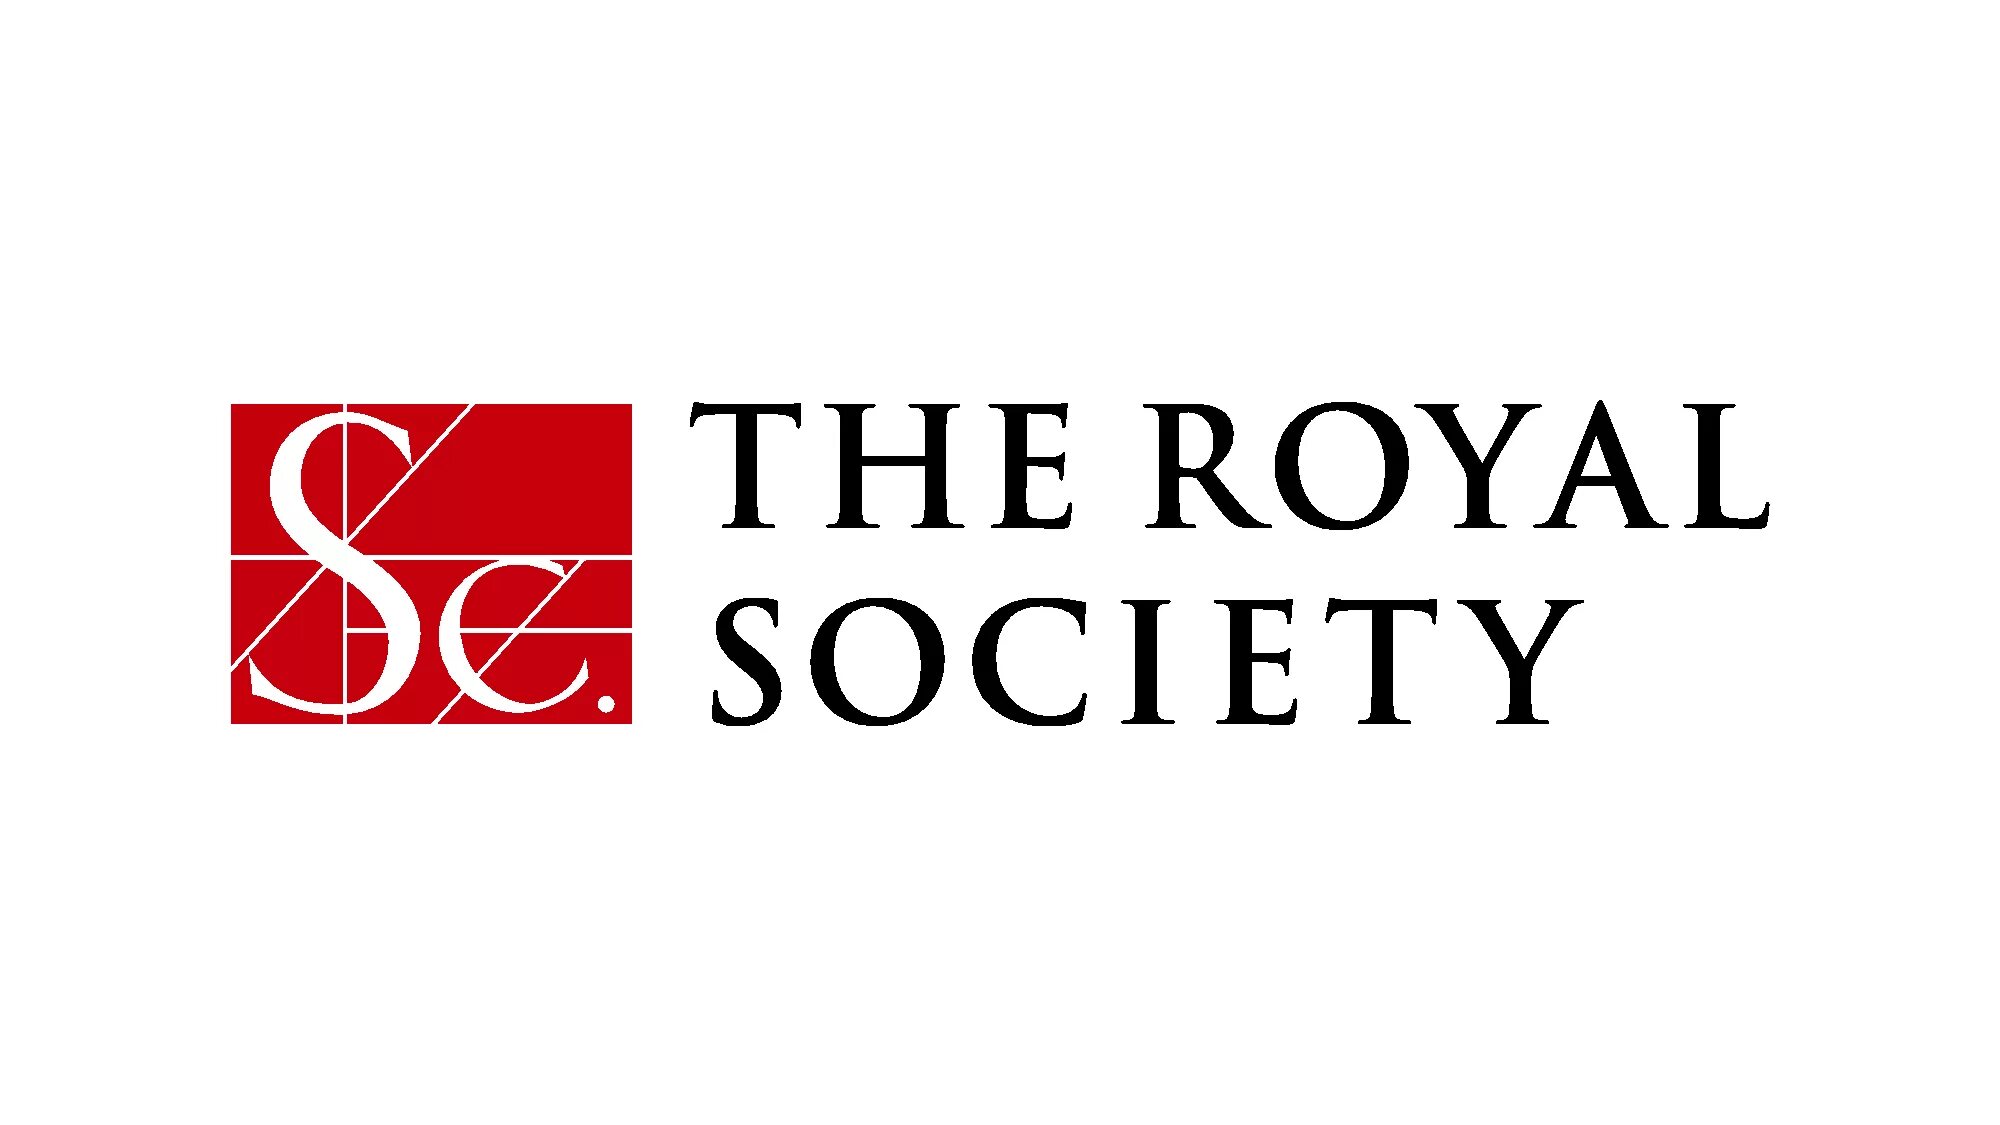 Royal society. Королевское общество (Royal Society). Royal Society of London. Королевское общество лого. Лондонское Королевское общество логотип.